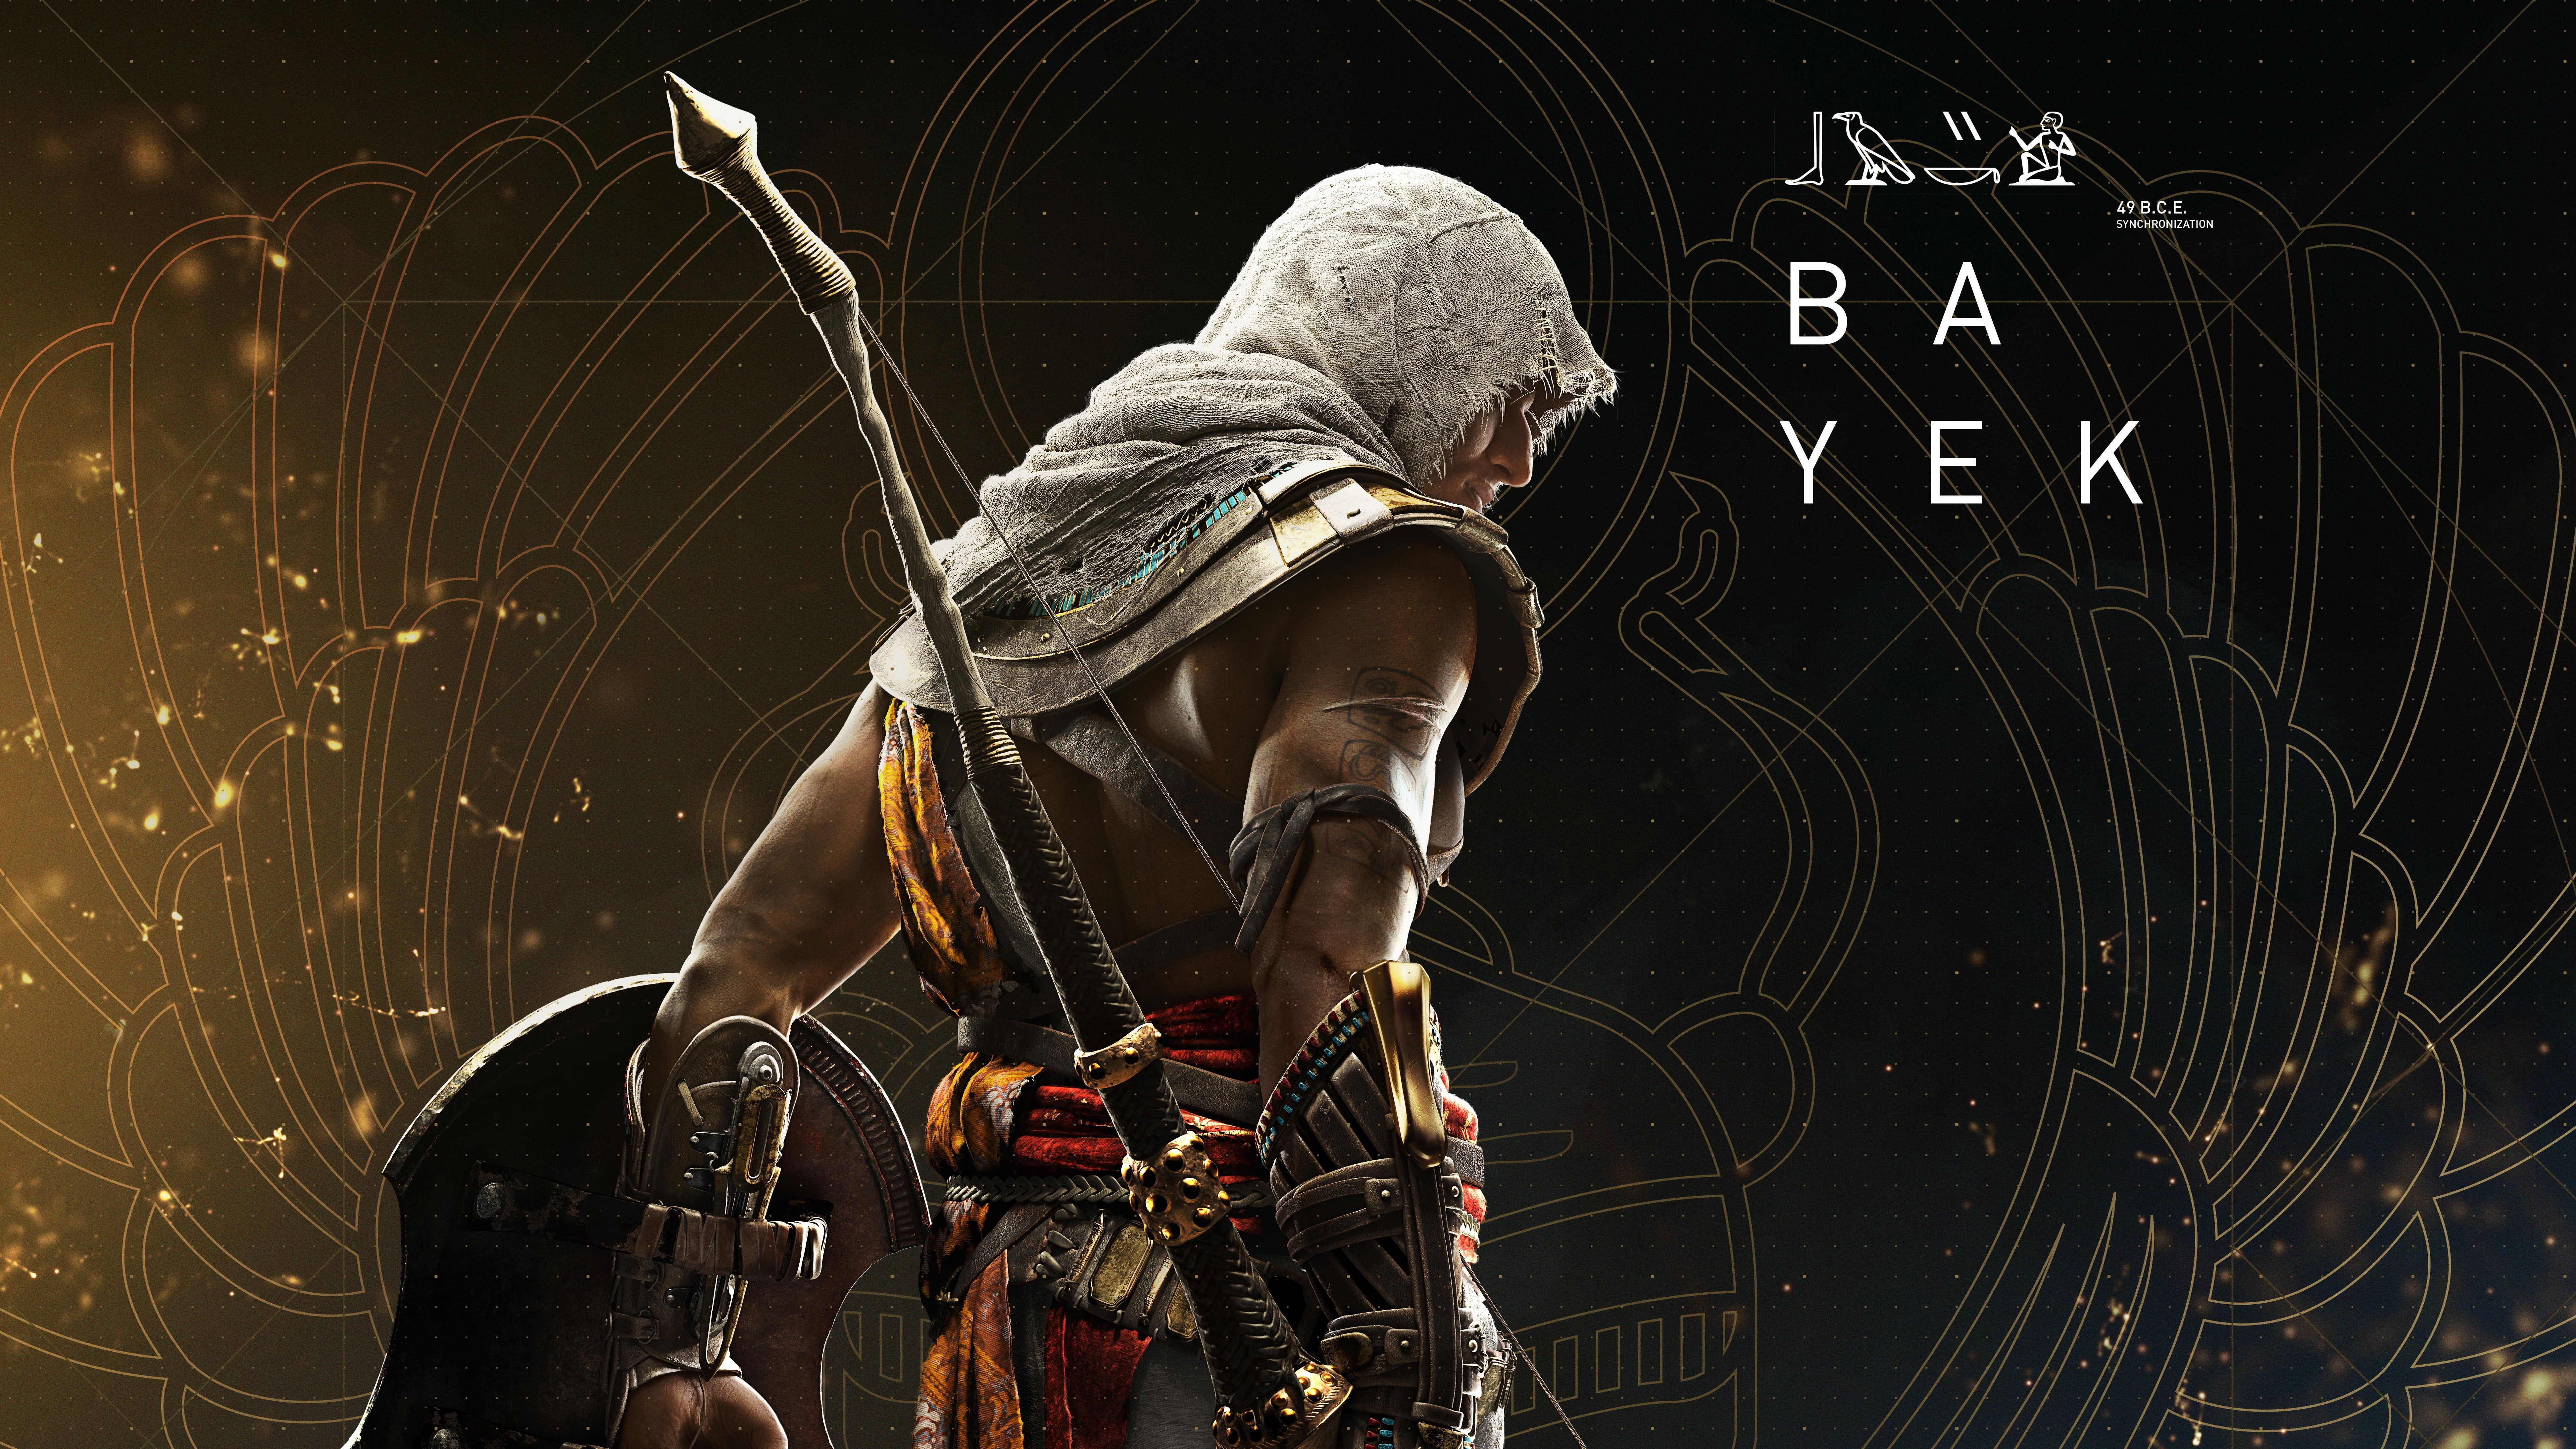 Ba Yek movie scene digital wallpaper #Bayek Assassin's Creed: Origins K K K #wallpaper. Assassin's creed wallpaper, Assassins creed origins, Assassins creed